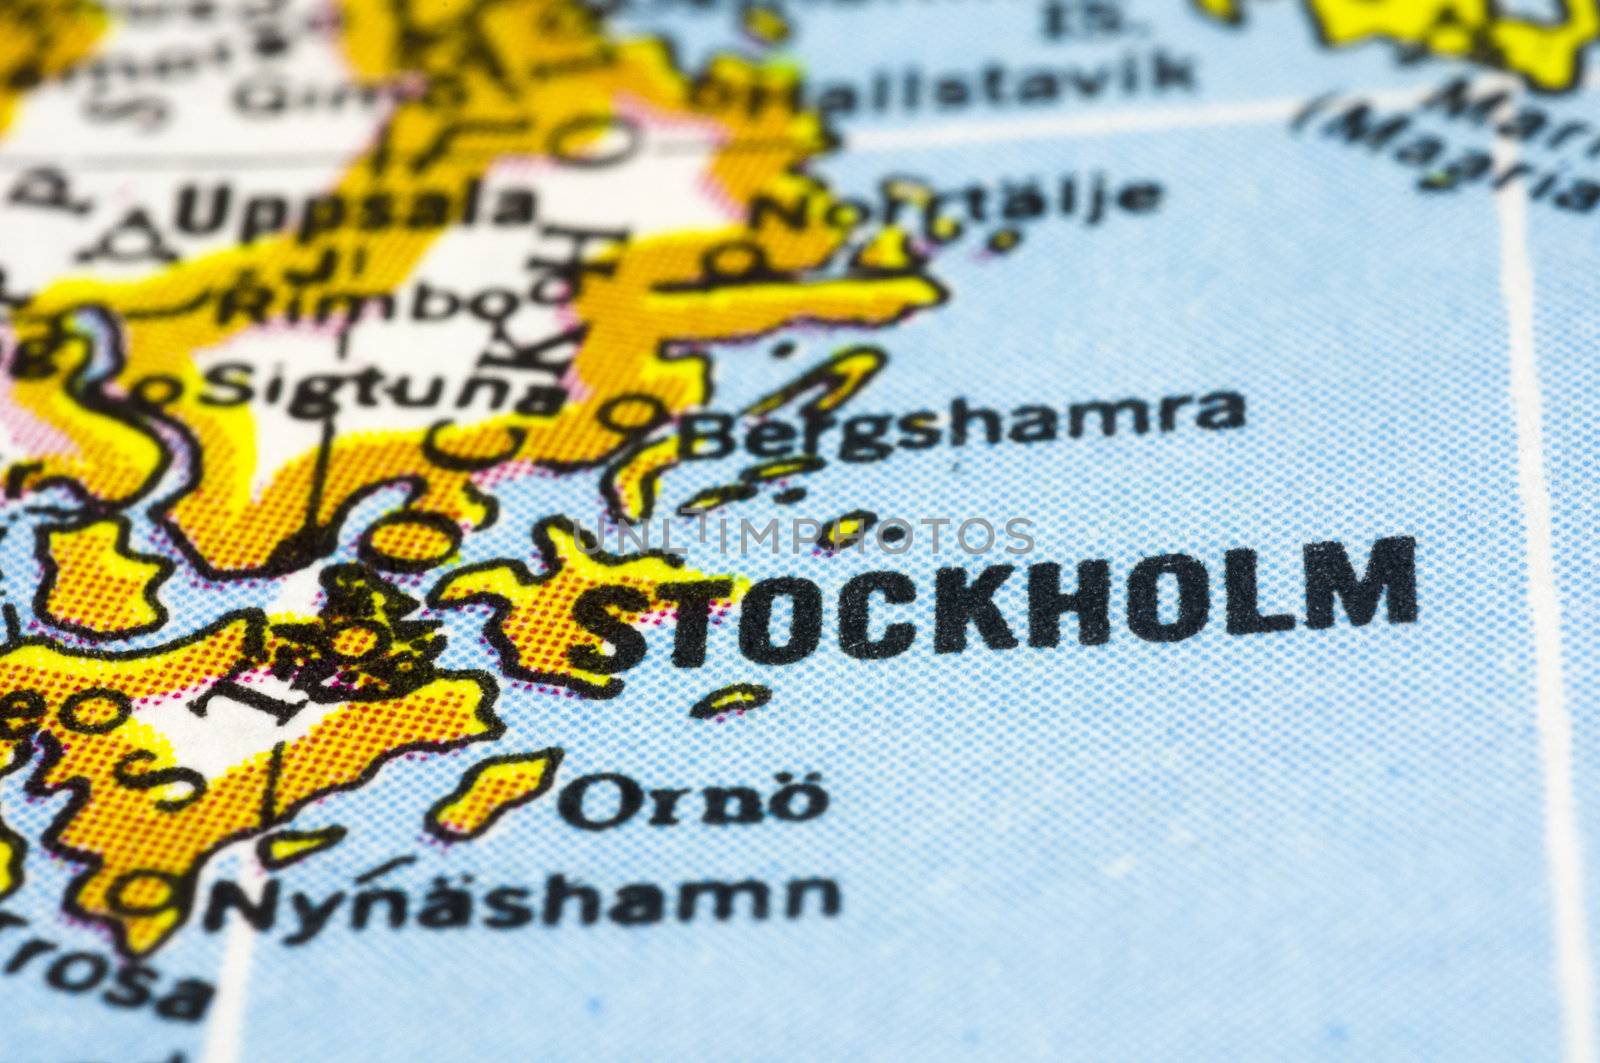 Stockholm, a close up shot of capital of sweden on map.